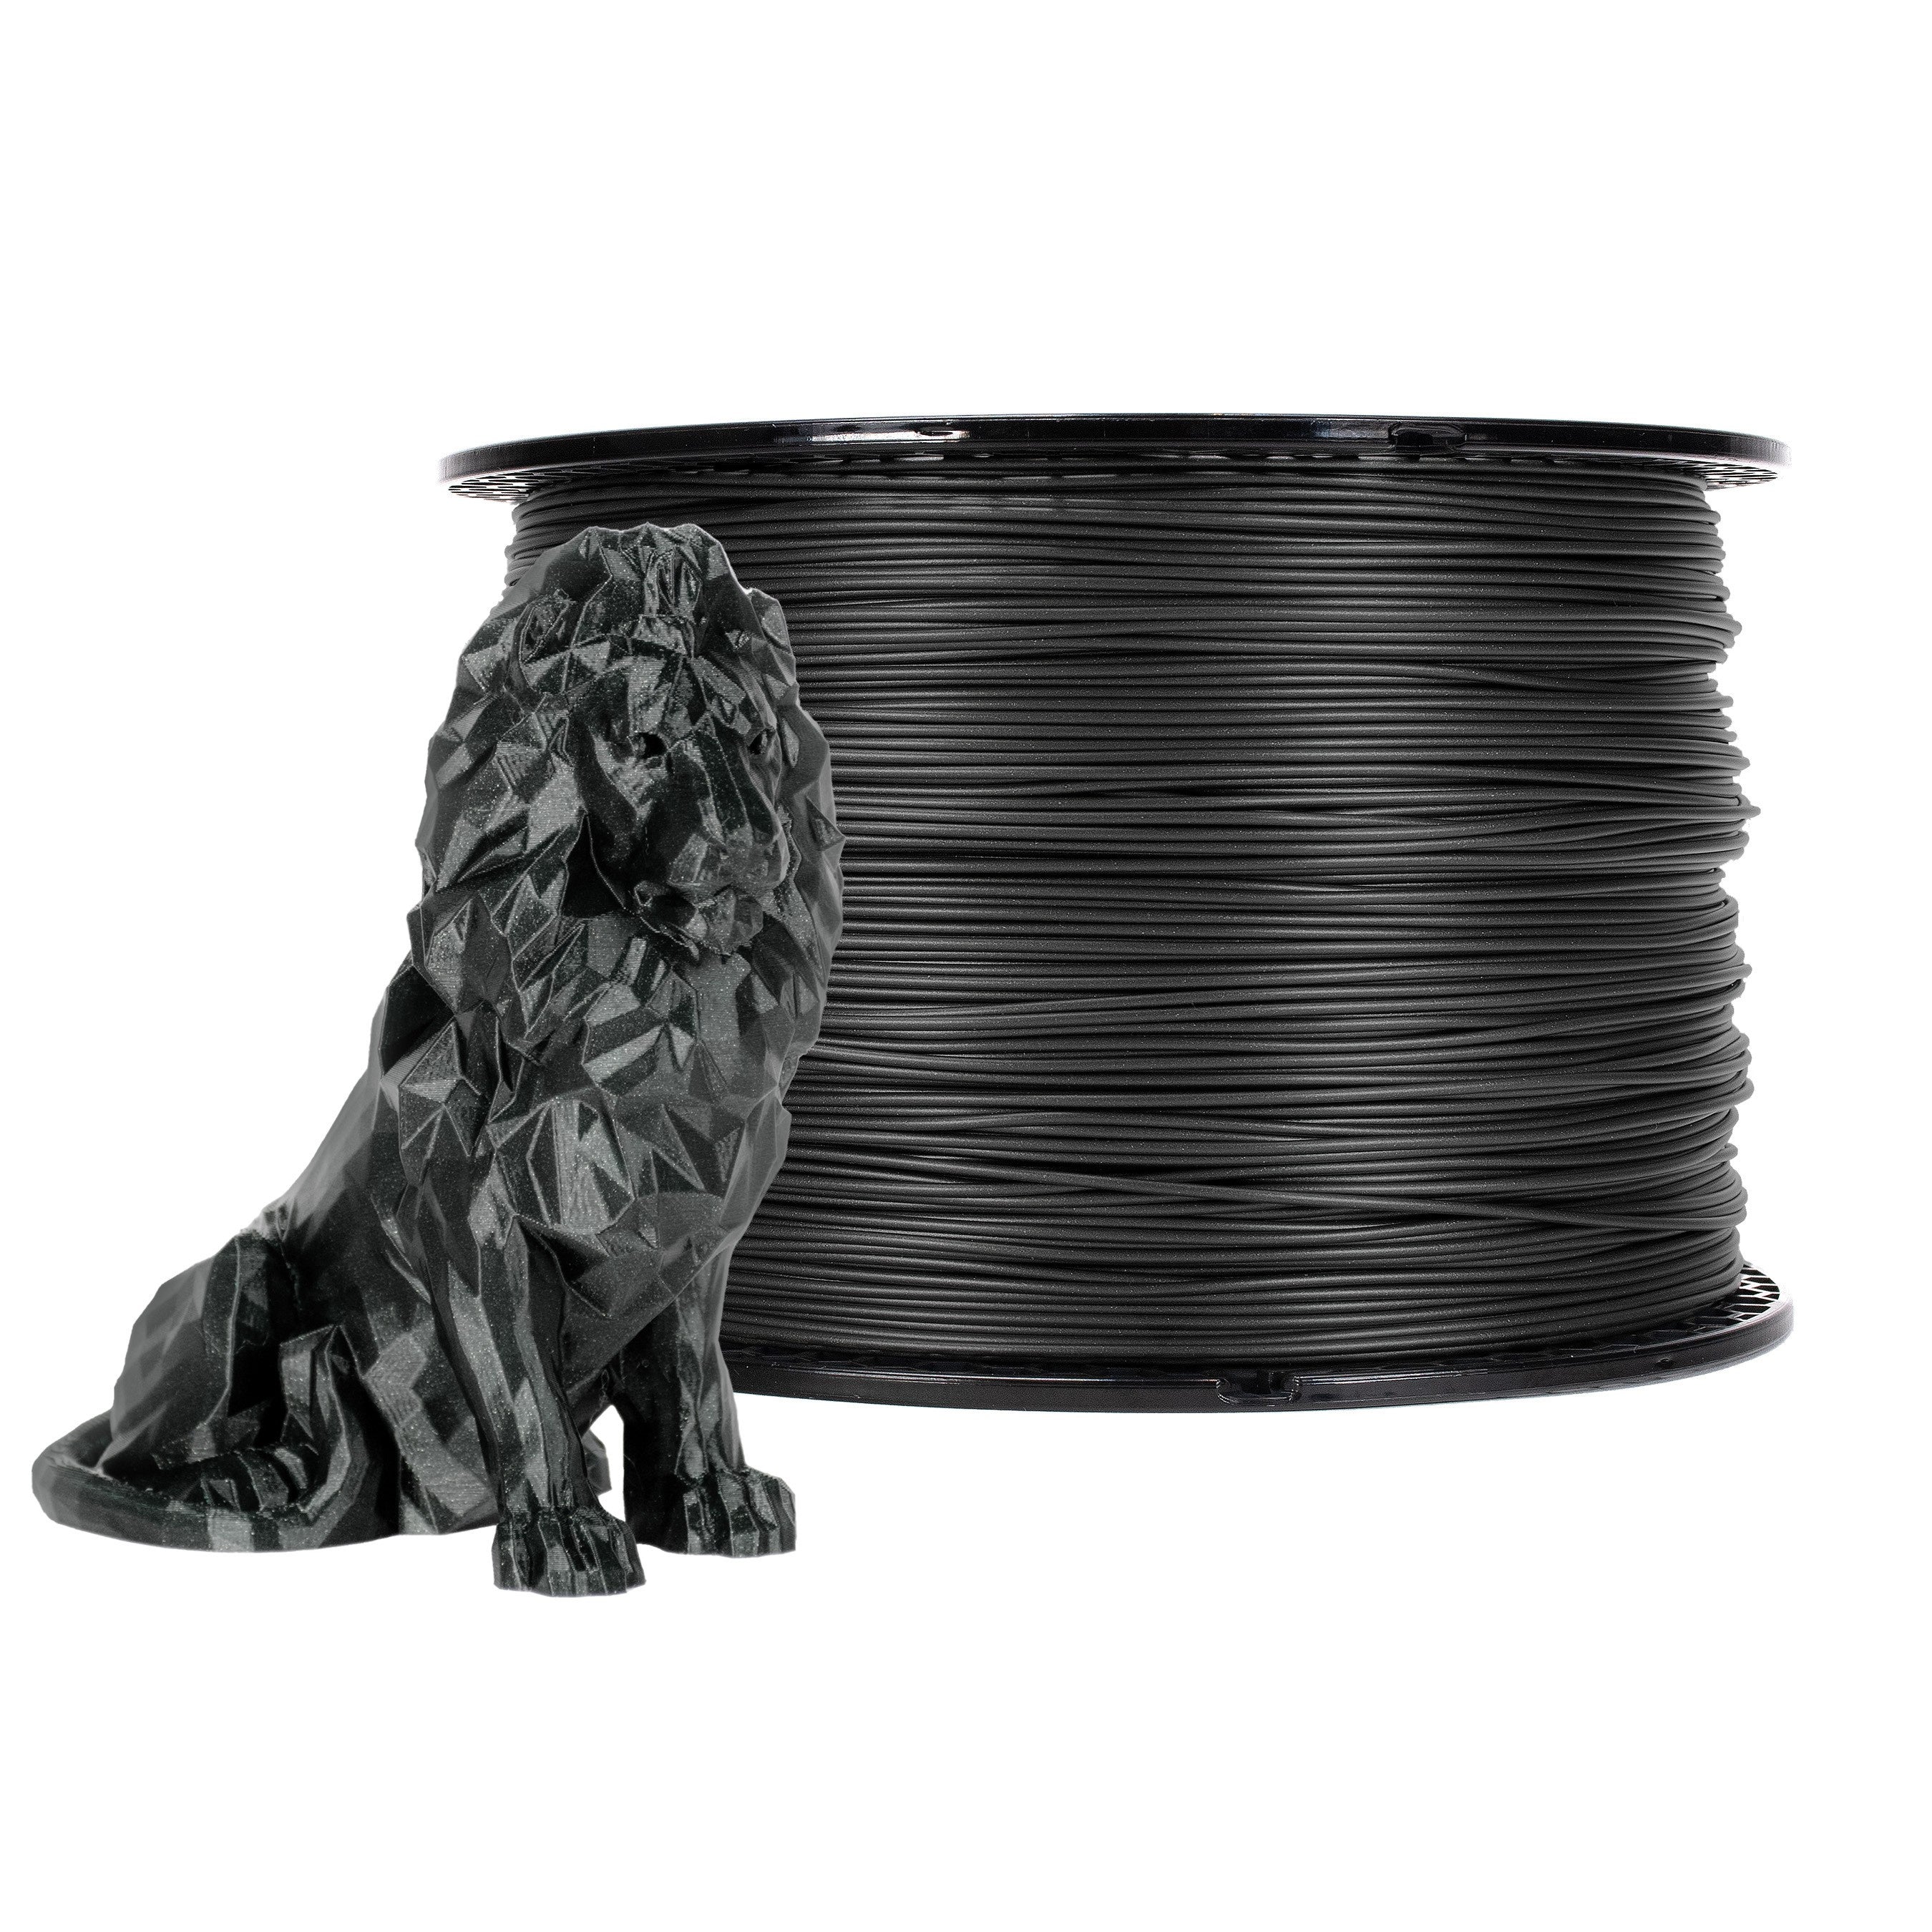 Prusa Prusament PLA 3D Printing Filament 1.75mm 2kg